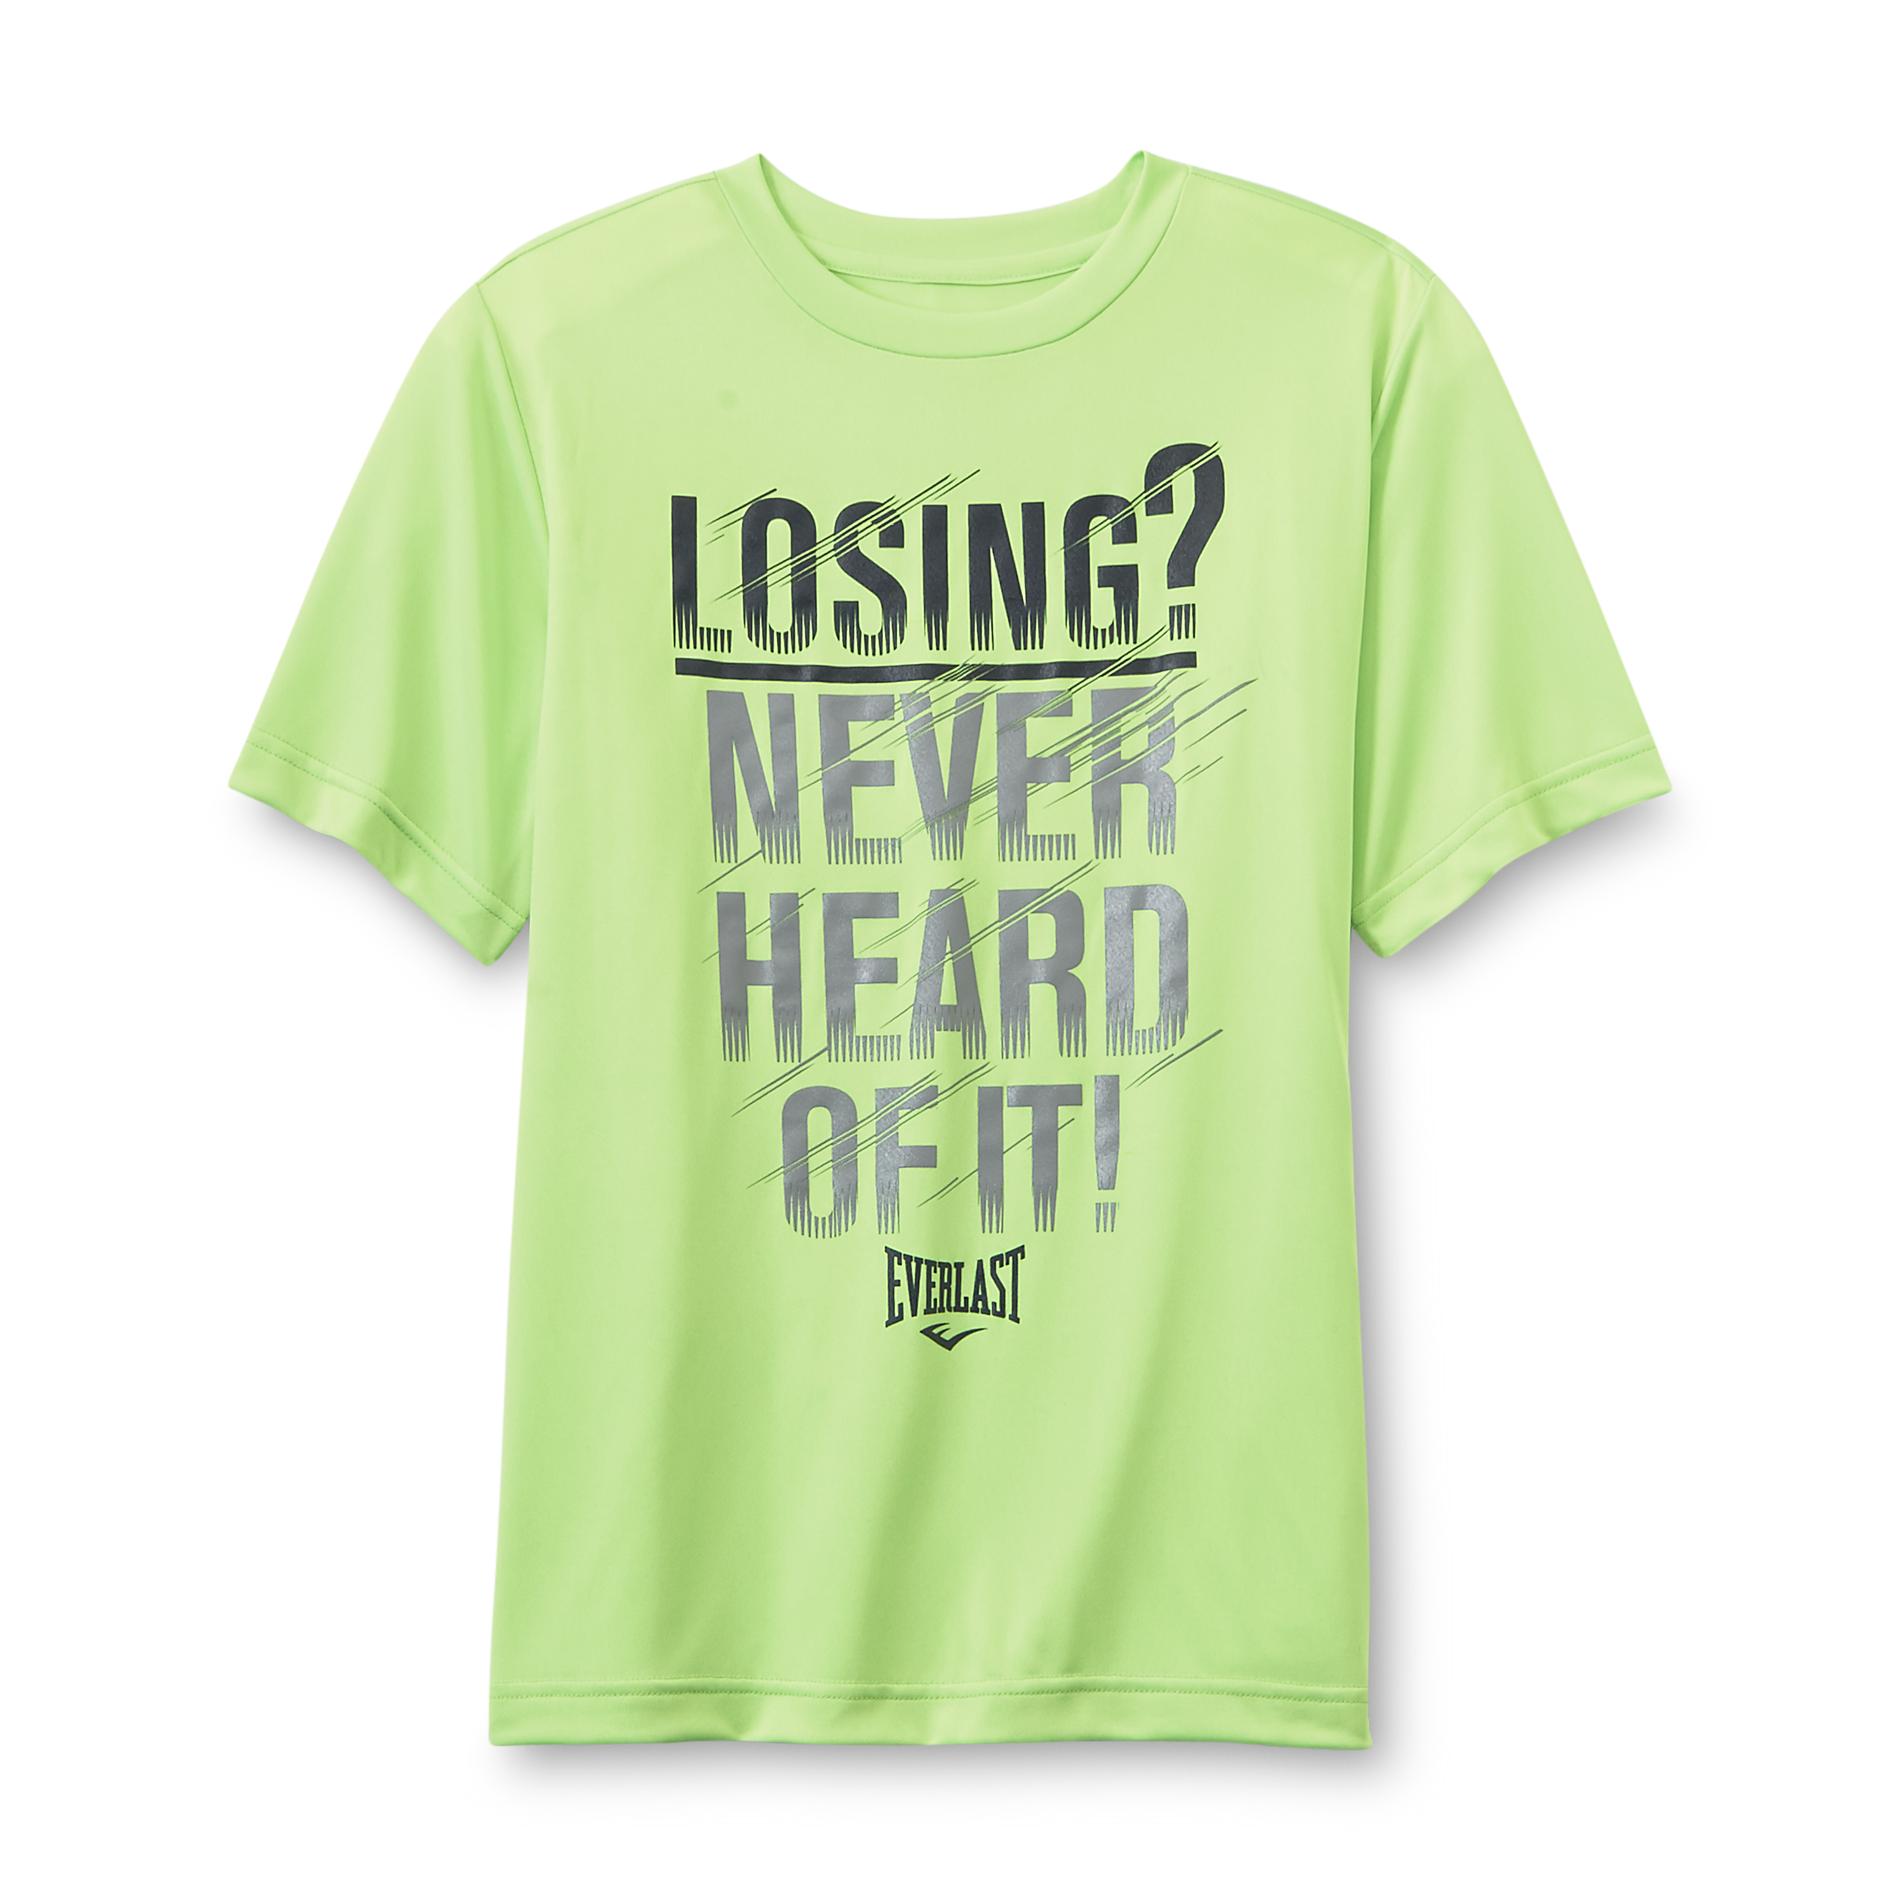 Everlast&reg; Boy's Graphic Athletic T-shirt - Never Heard Of Losing